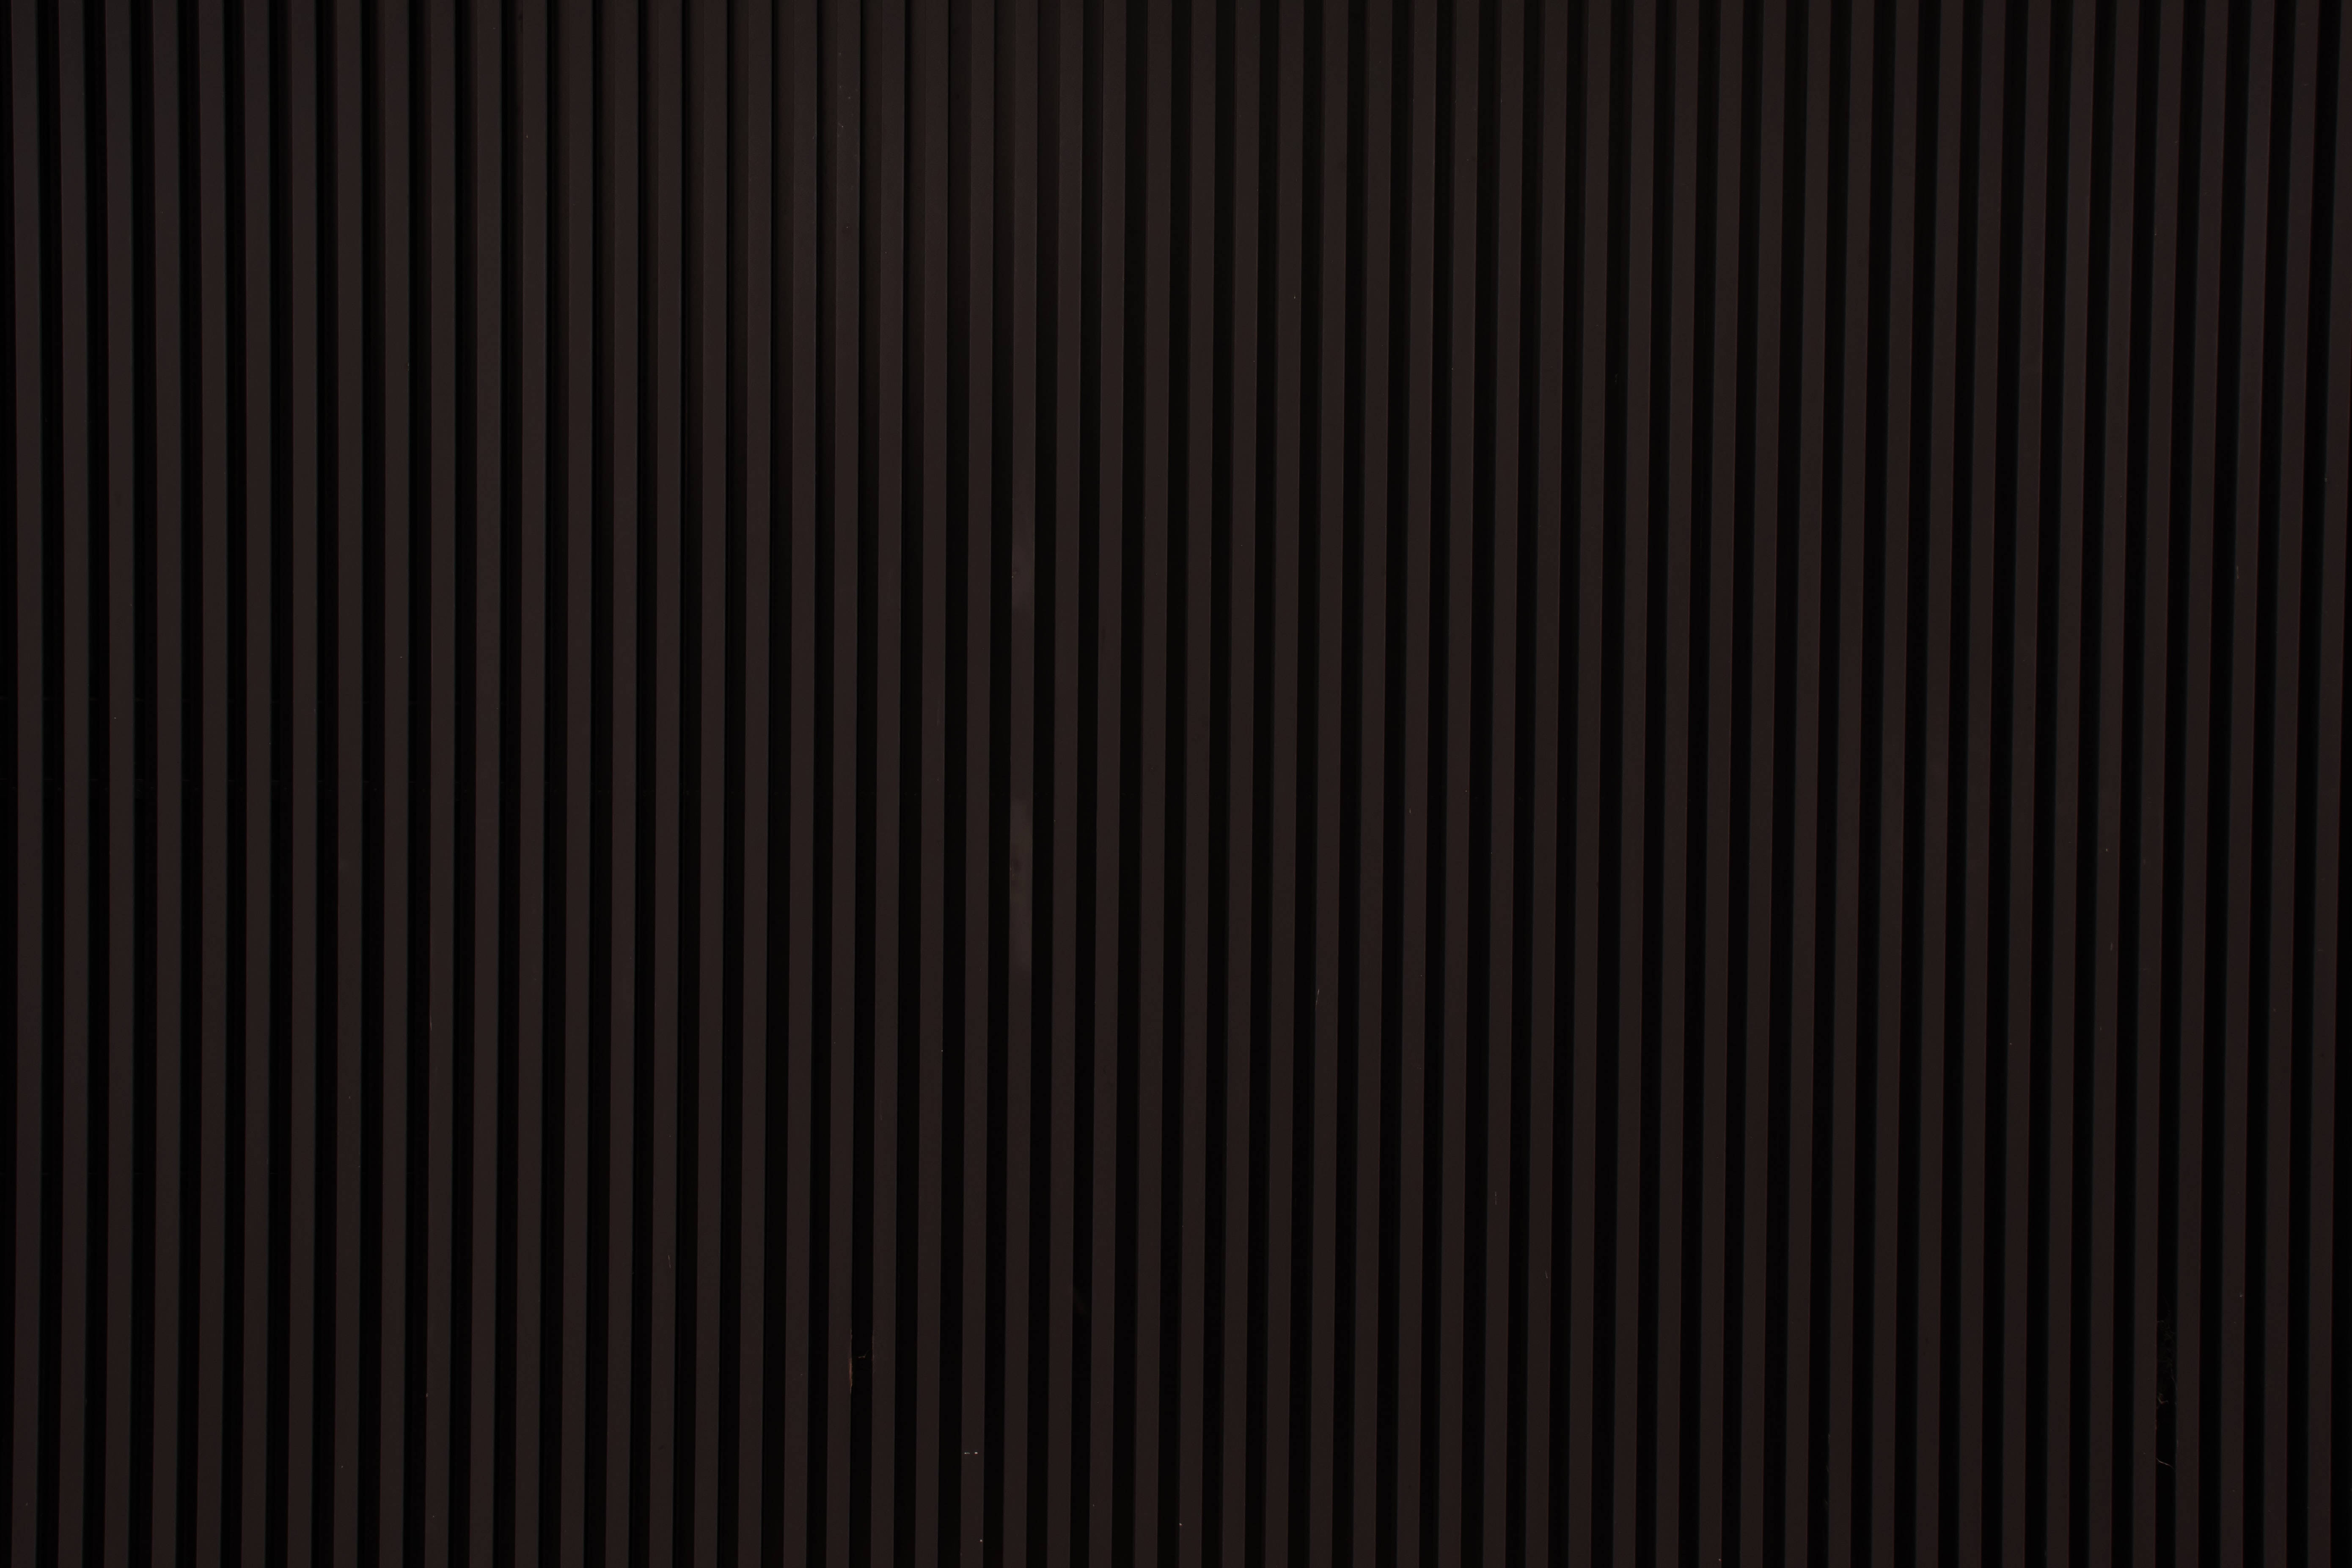 2510555 Black Stripes Background Images Stock Photos  Vectors   Shutterstock